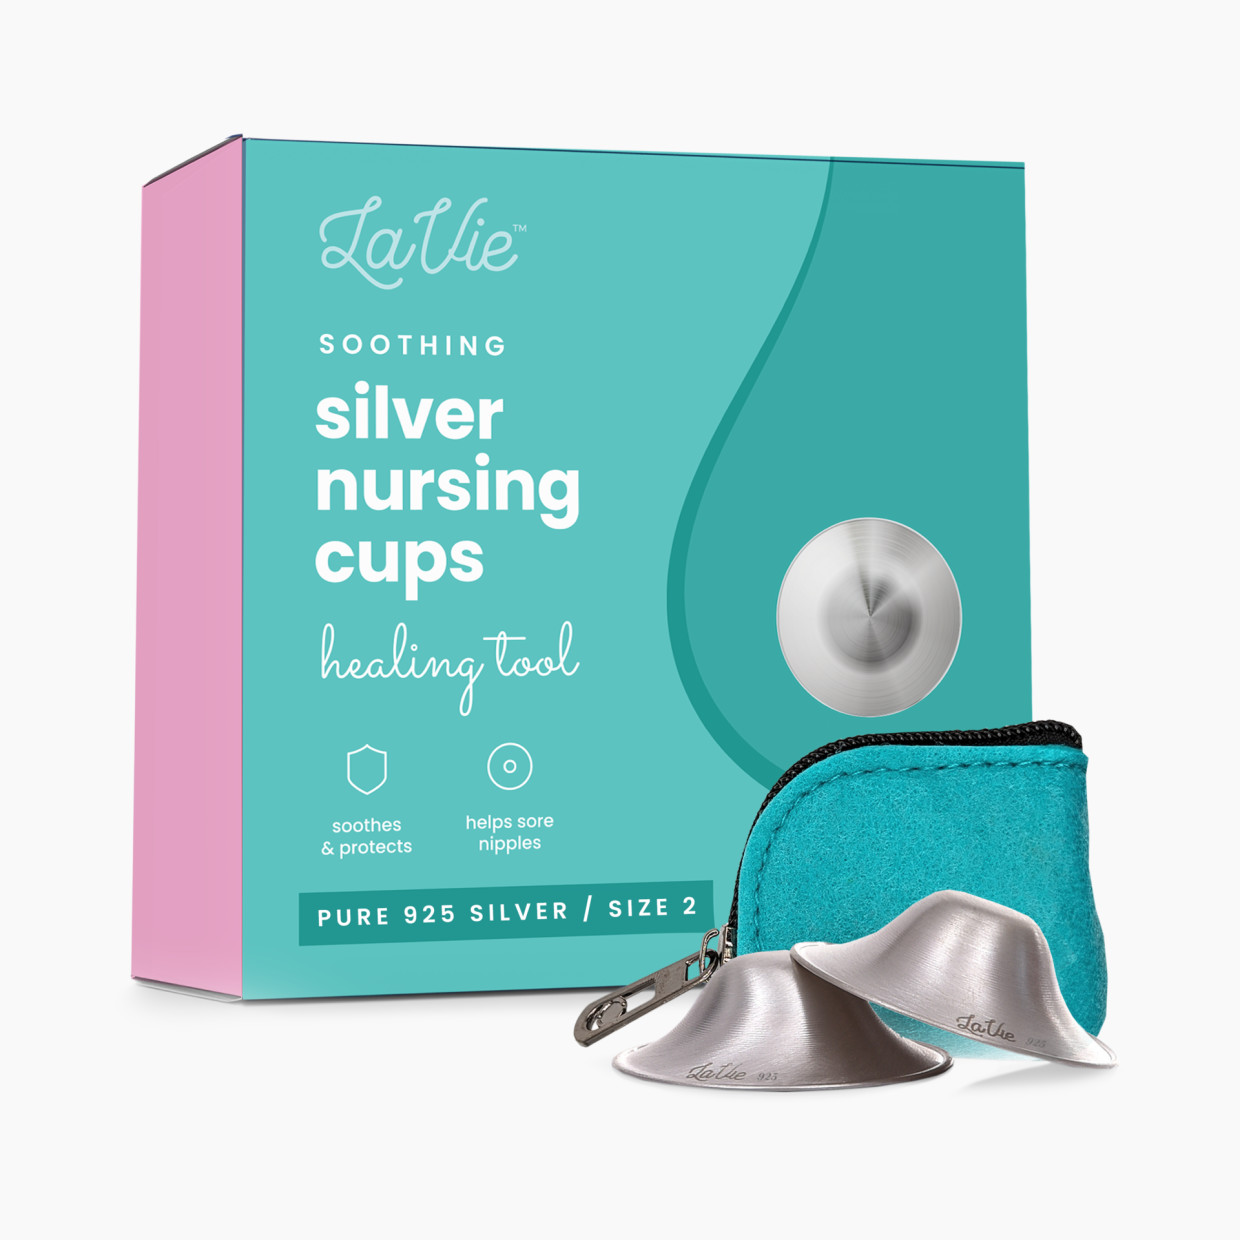 LaVie Silver Nursing Cup Set - Silver, Size 2 -Xl.